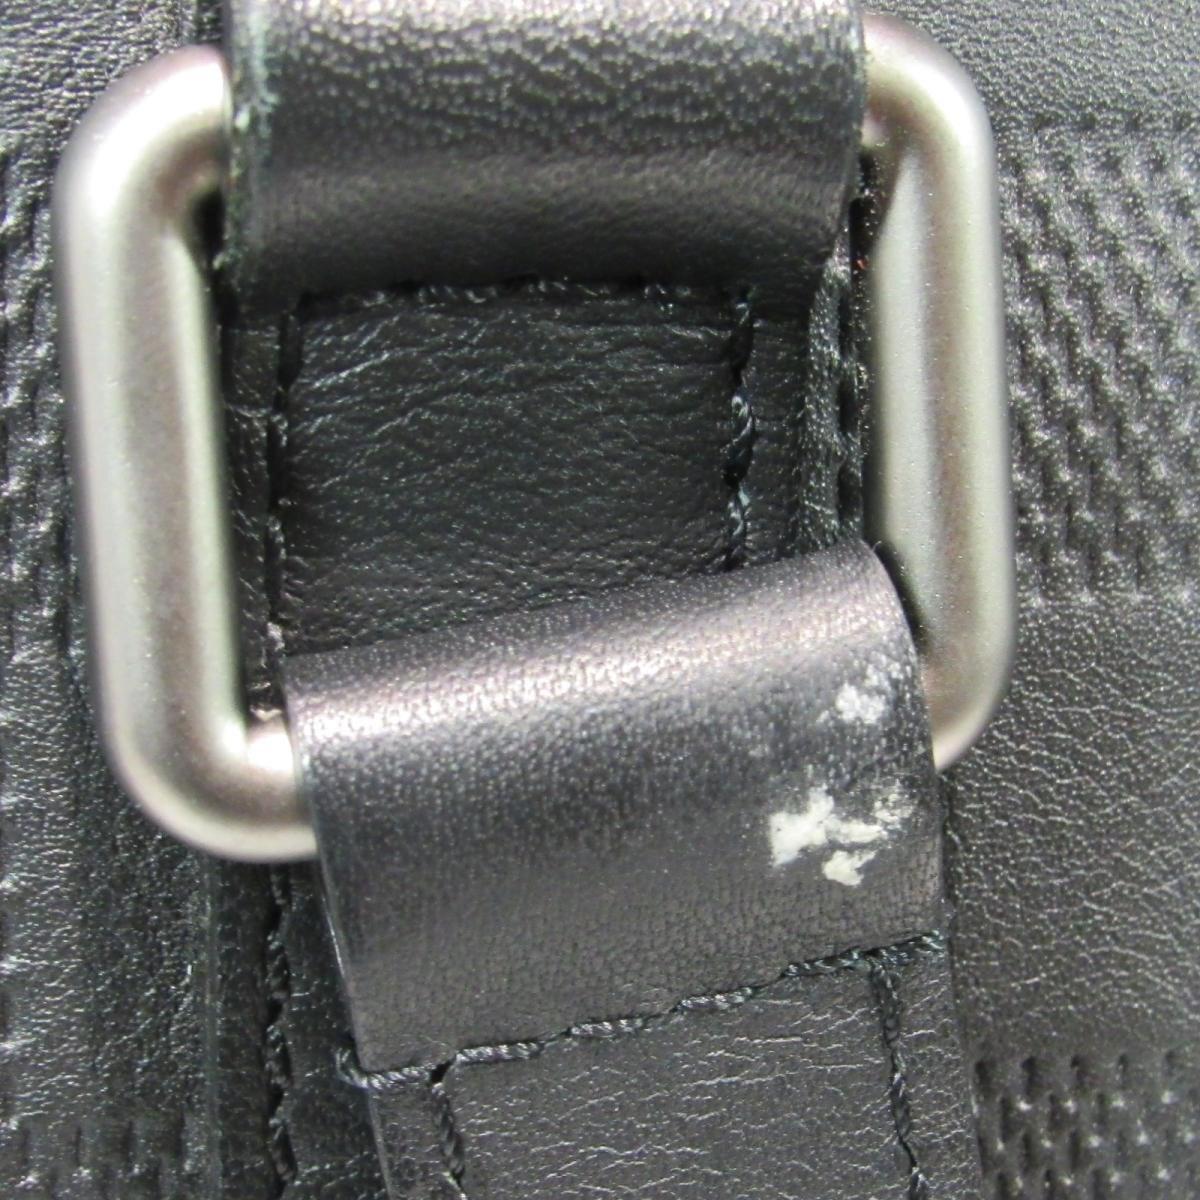 Lyst - Louis Vuitton Tadao Tote Bag Business Bag N41227 Damier Infini Onyx Used Vintage in Black ...